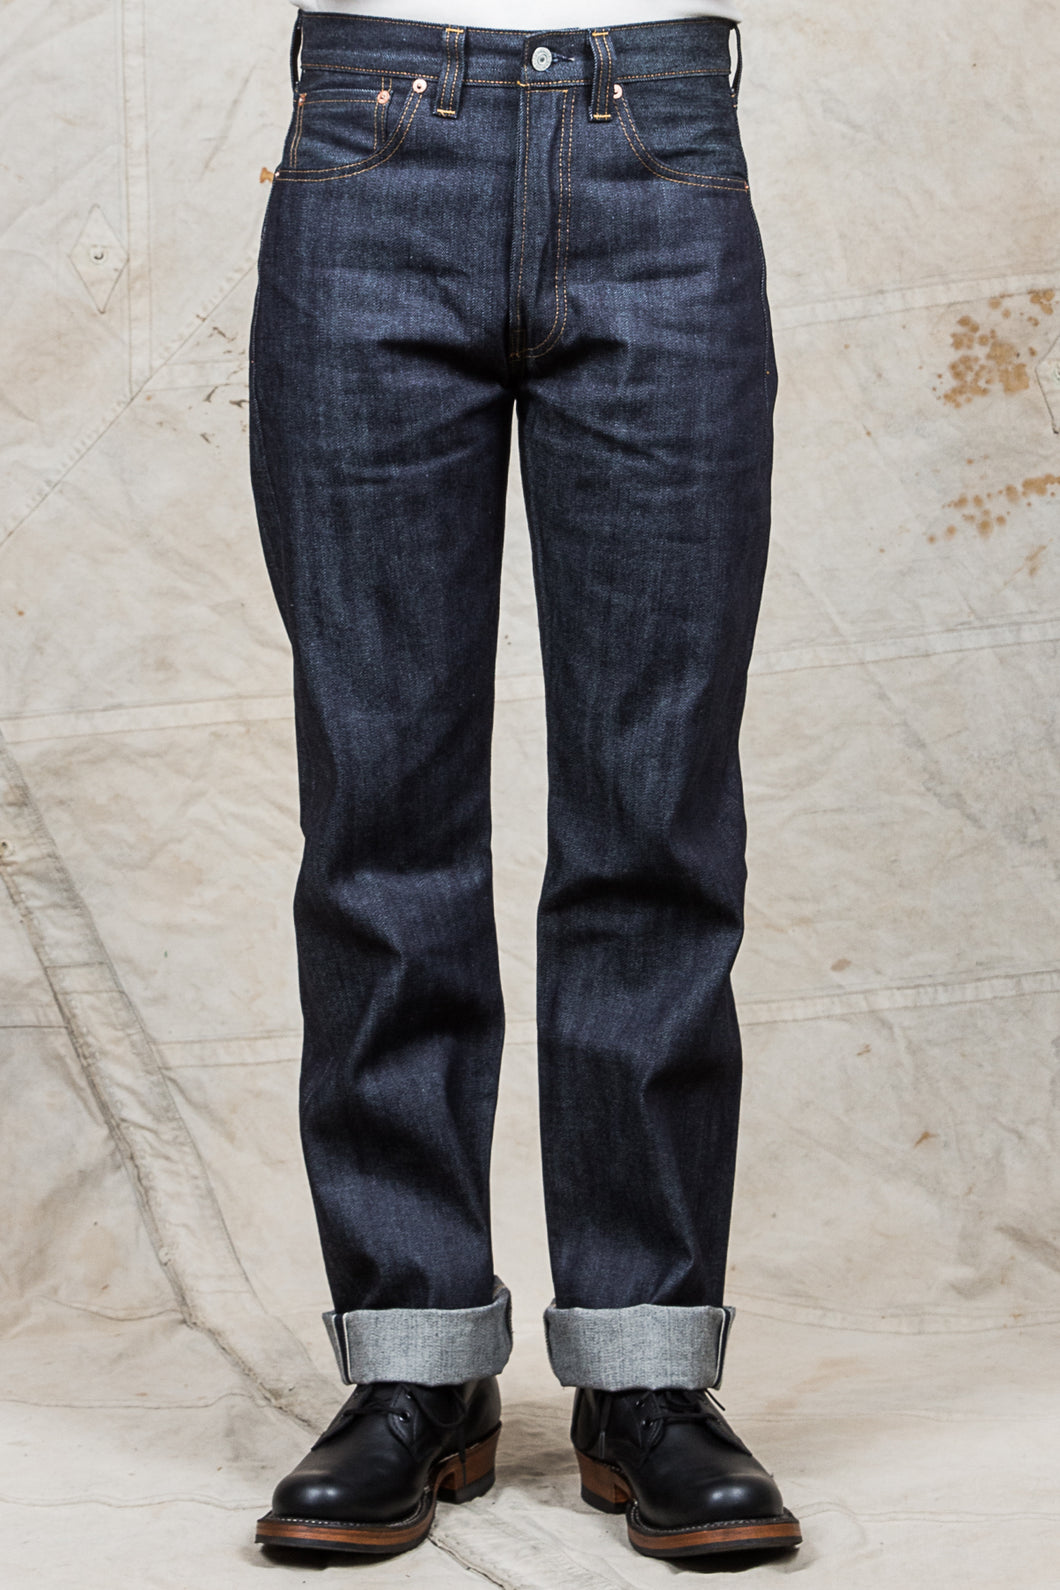 501xx jeans